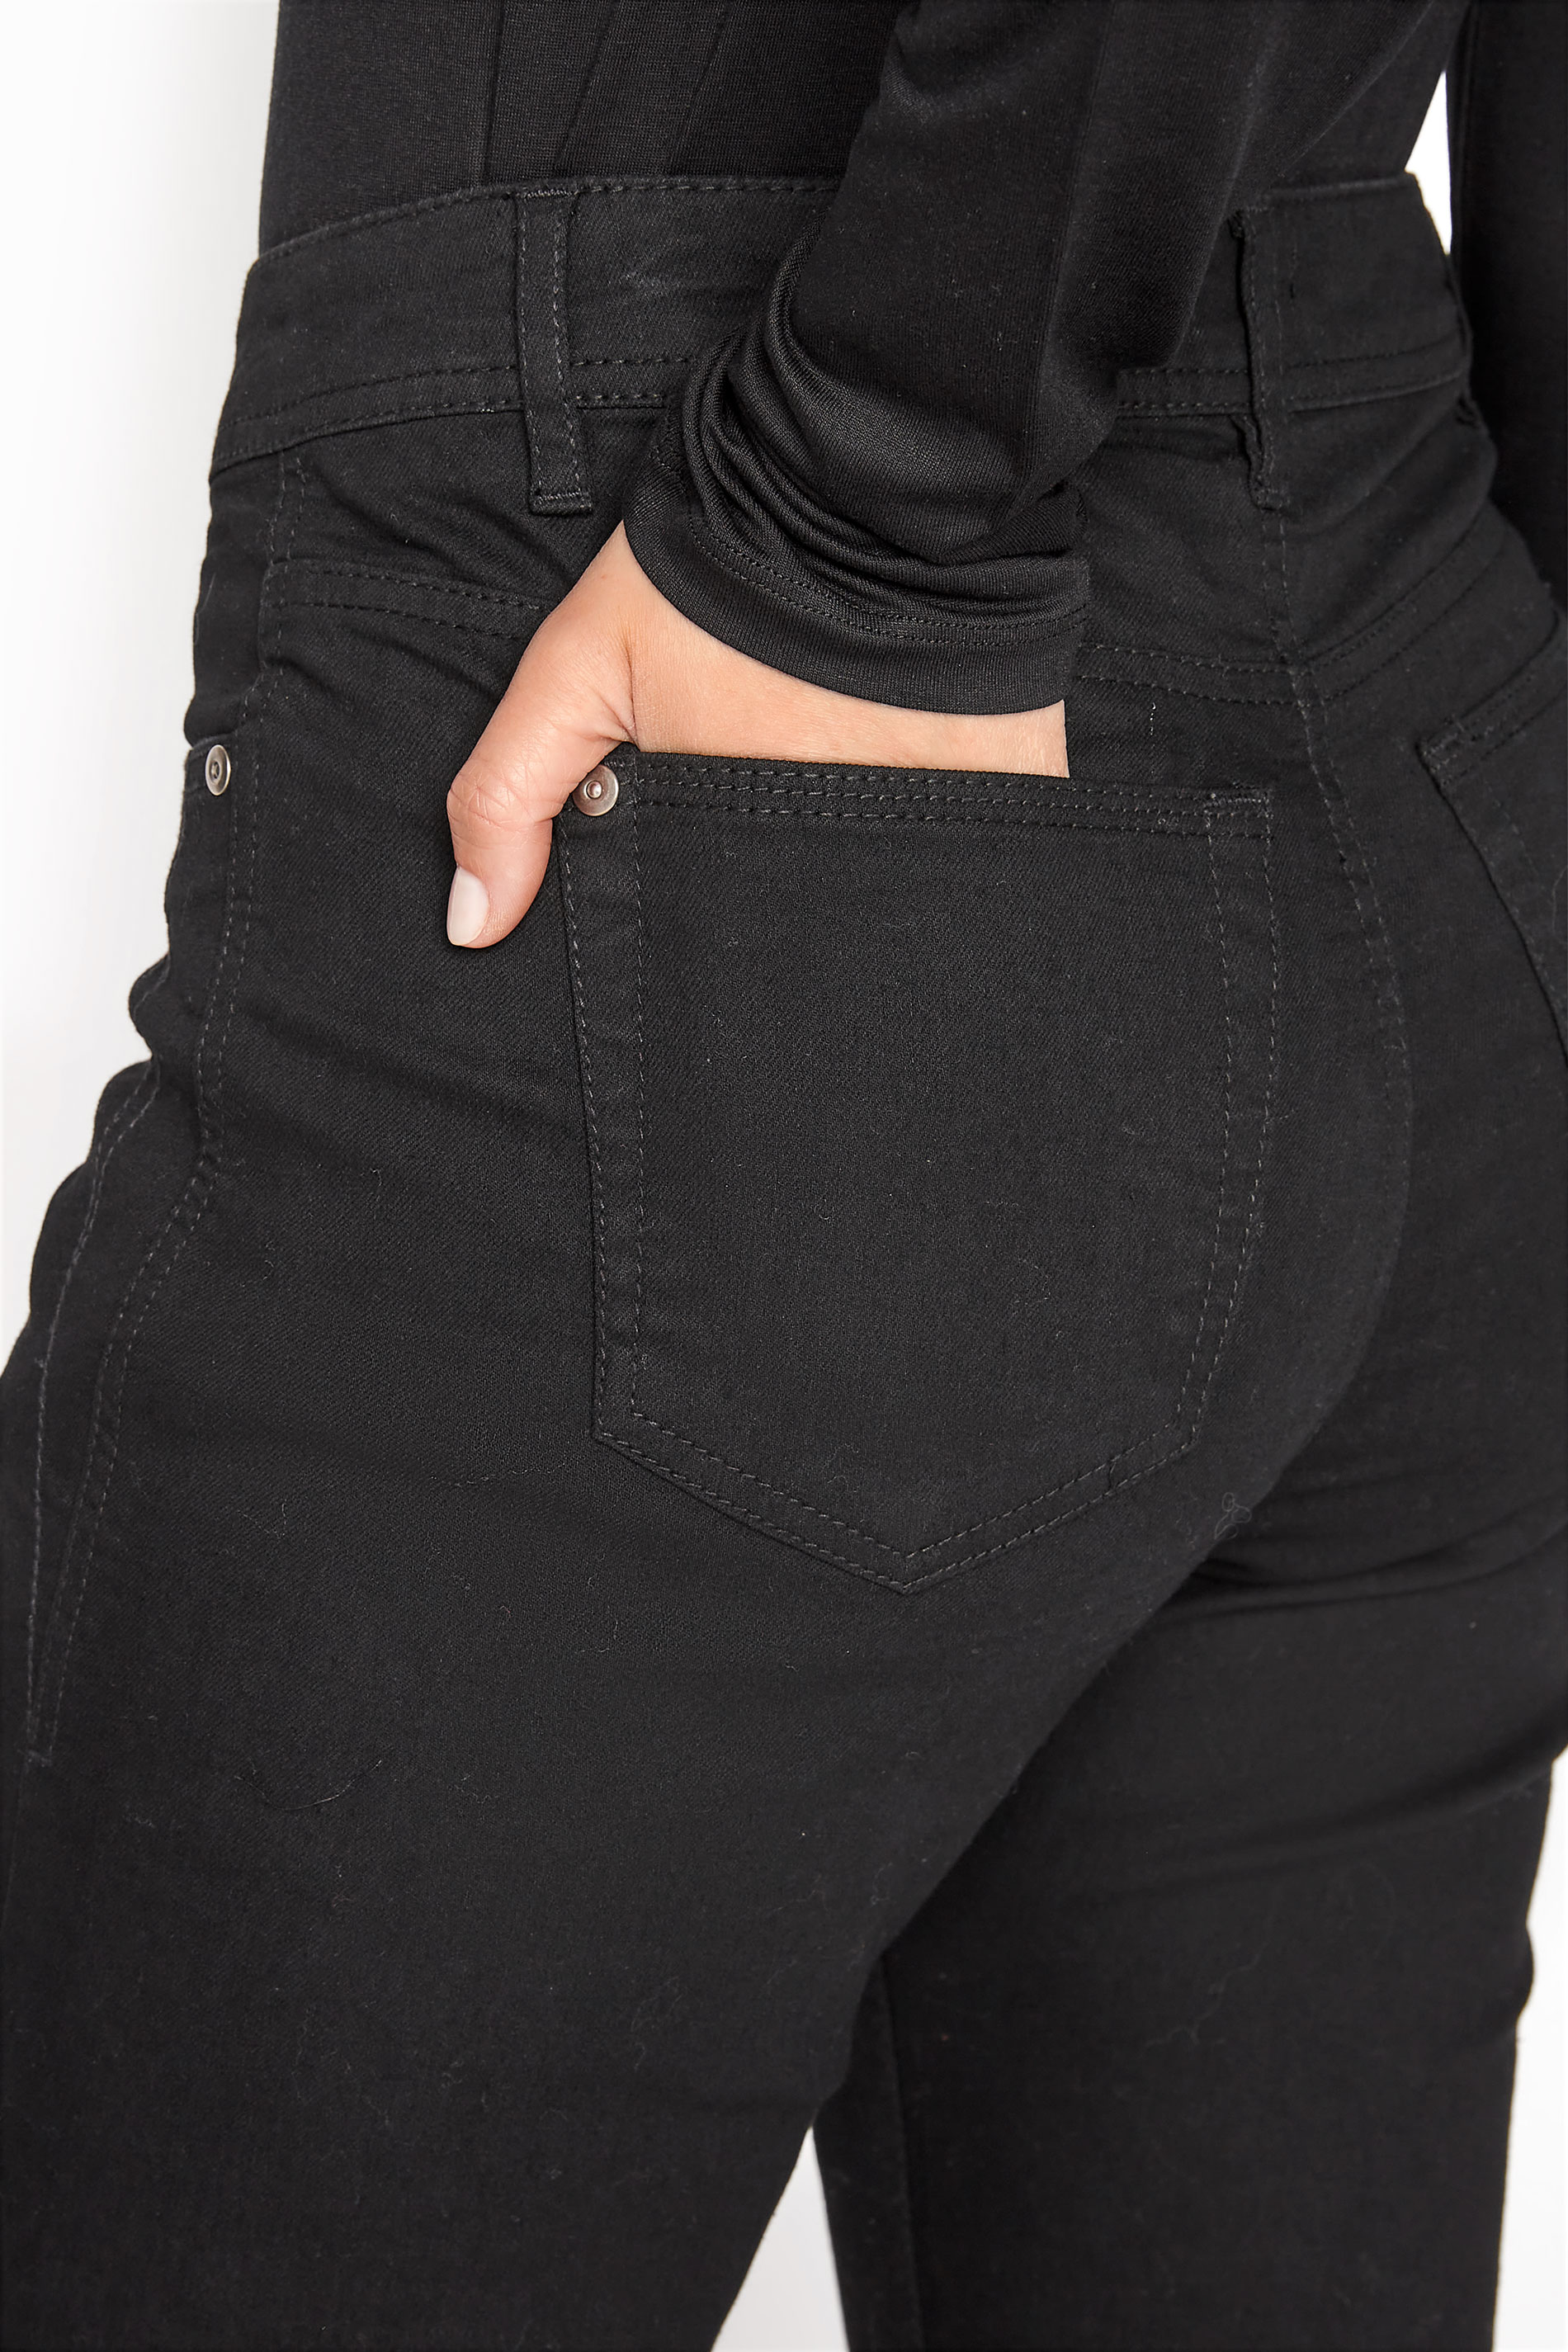 LTS Black RAE Bootcut Jeans | Long Tall Sally